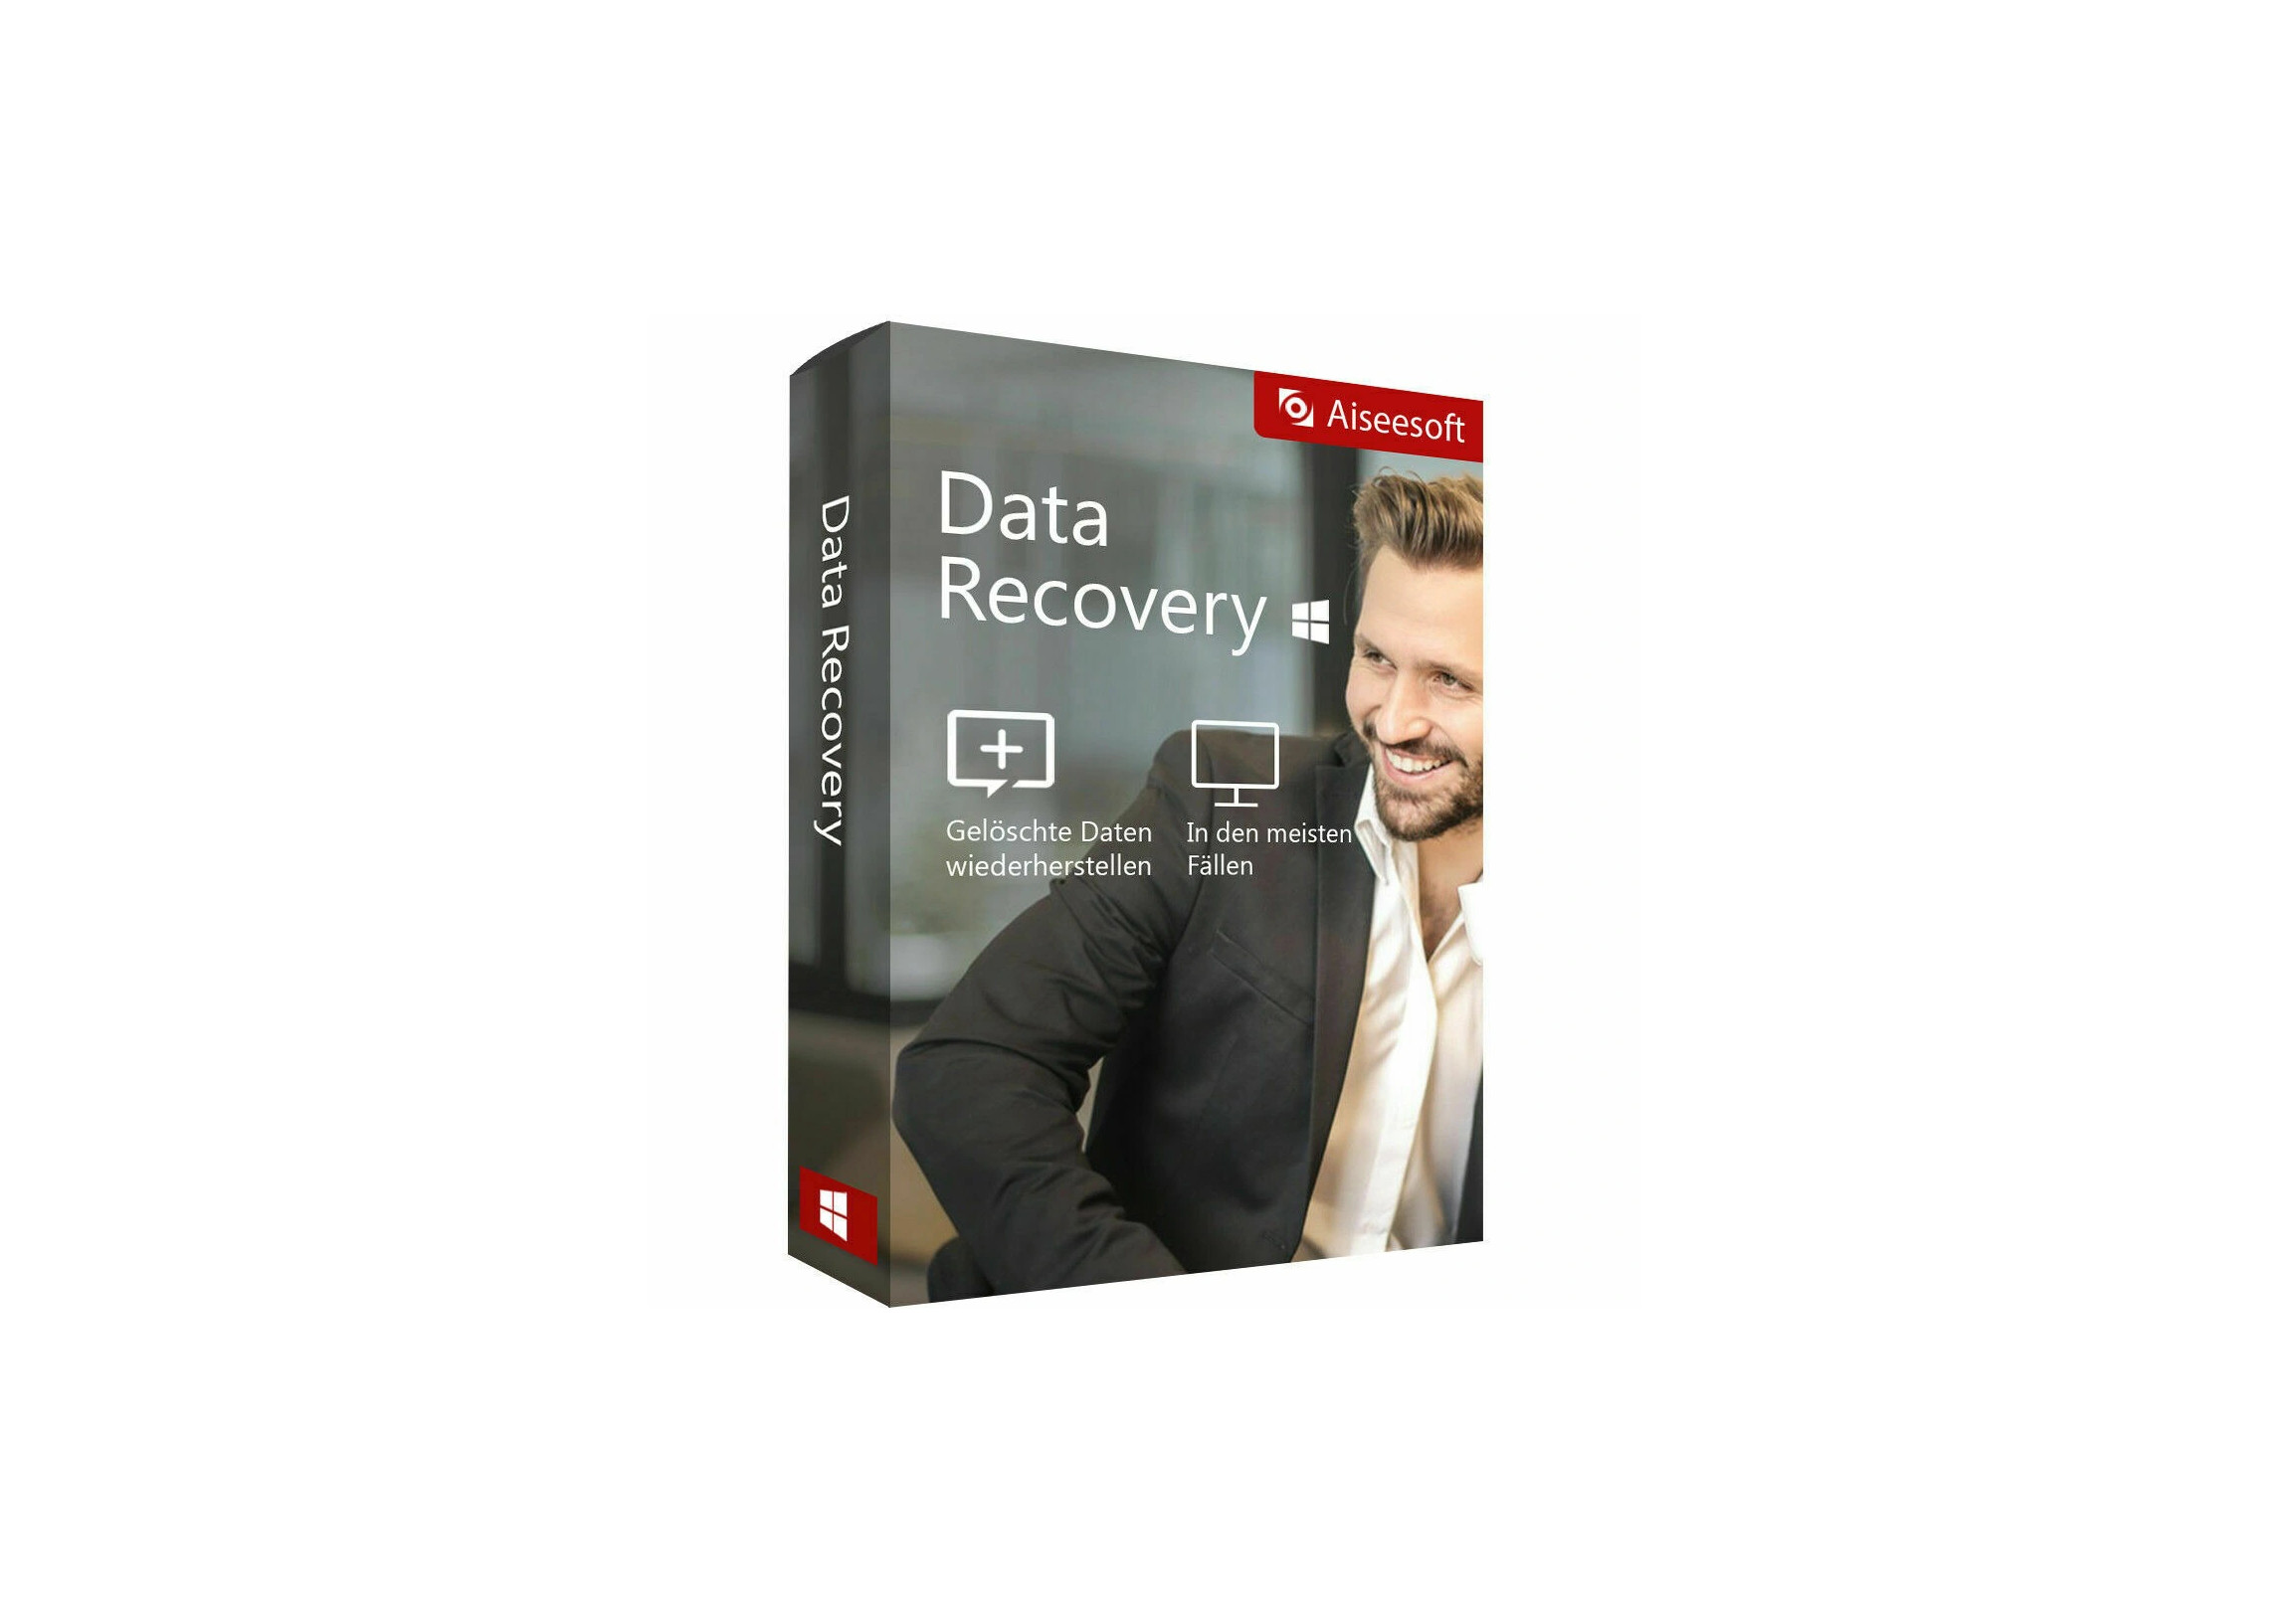 Aiseesoft Data Recovery Key (1 Year / 1 PC) $2.25